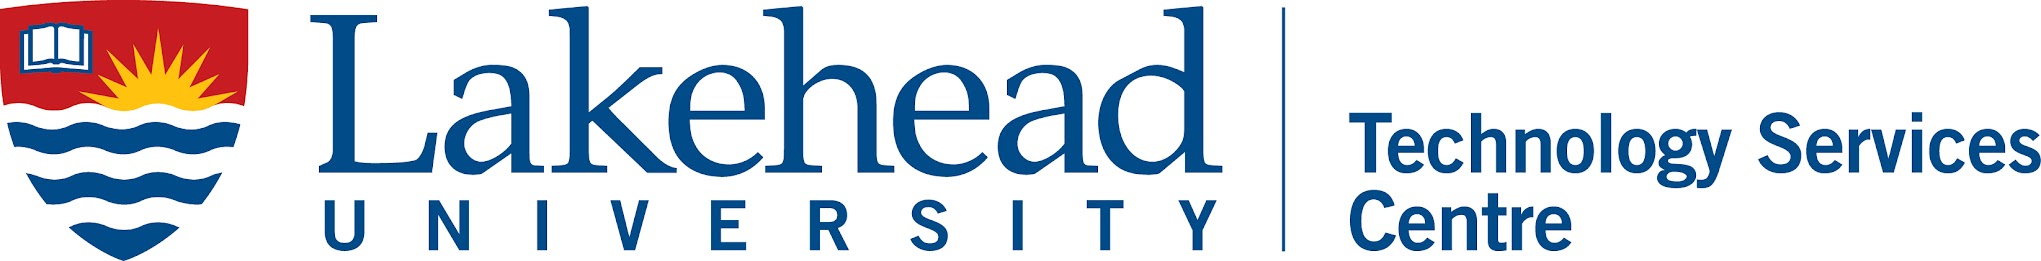 Lakehead University Technology Services Centre